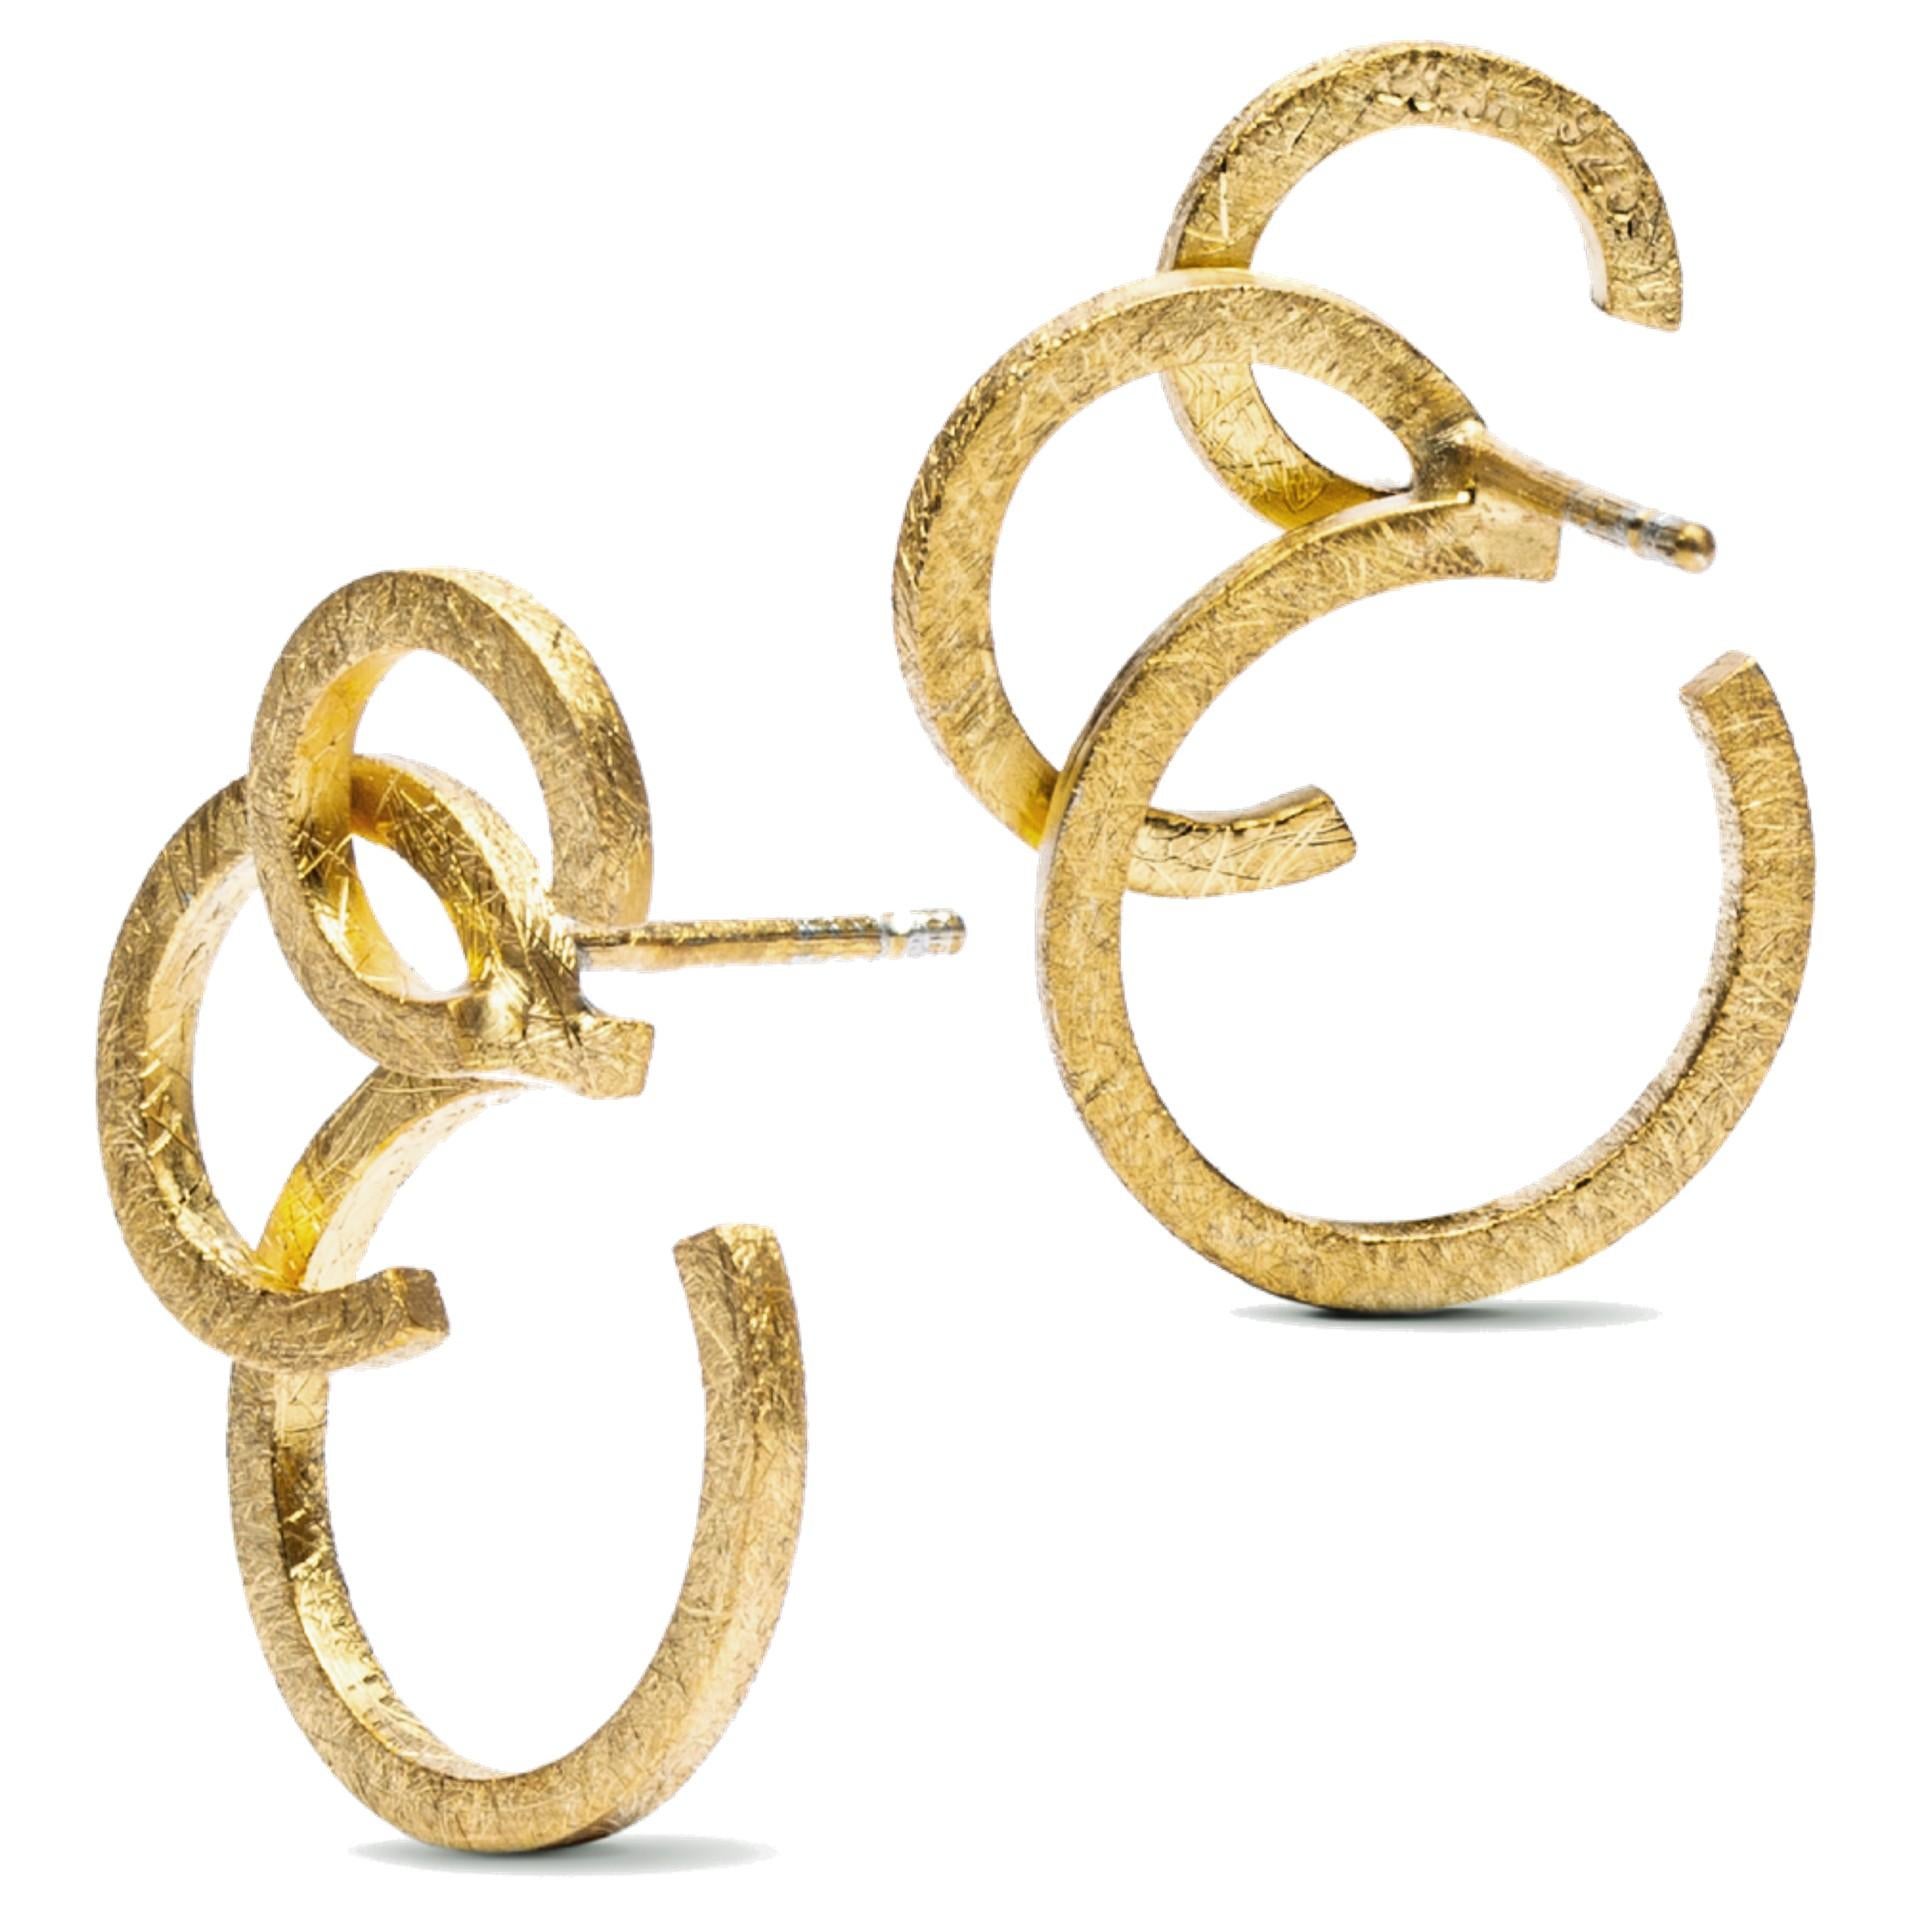 ampersand earrings